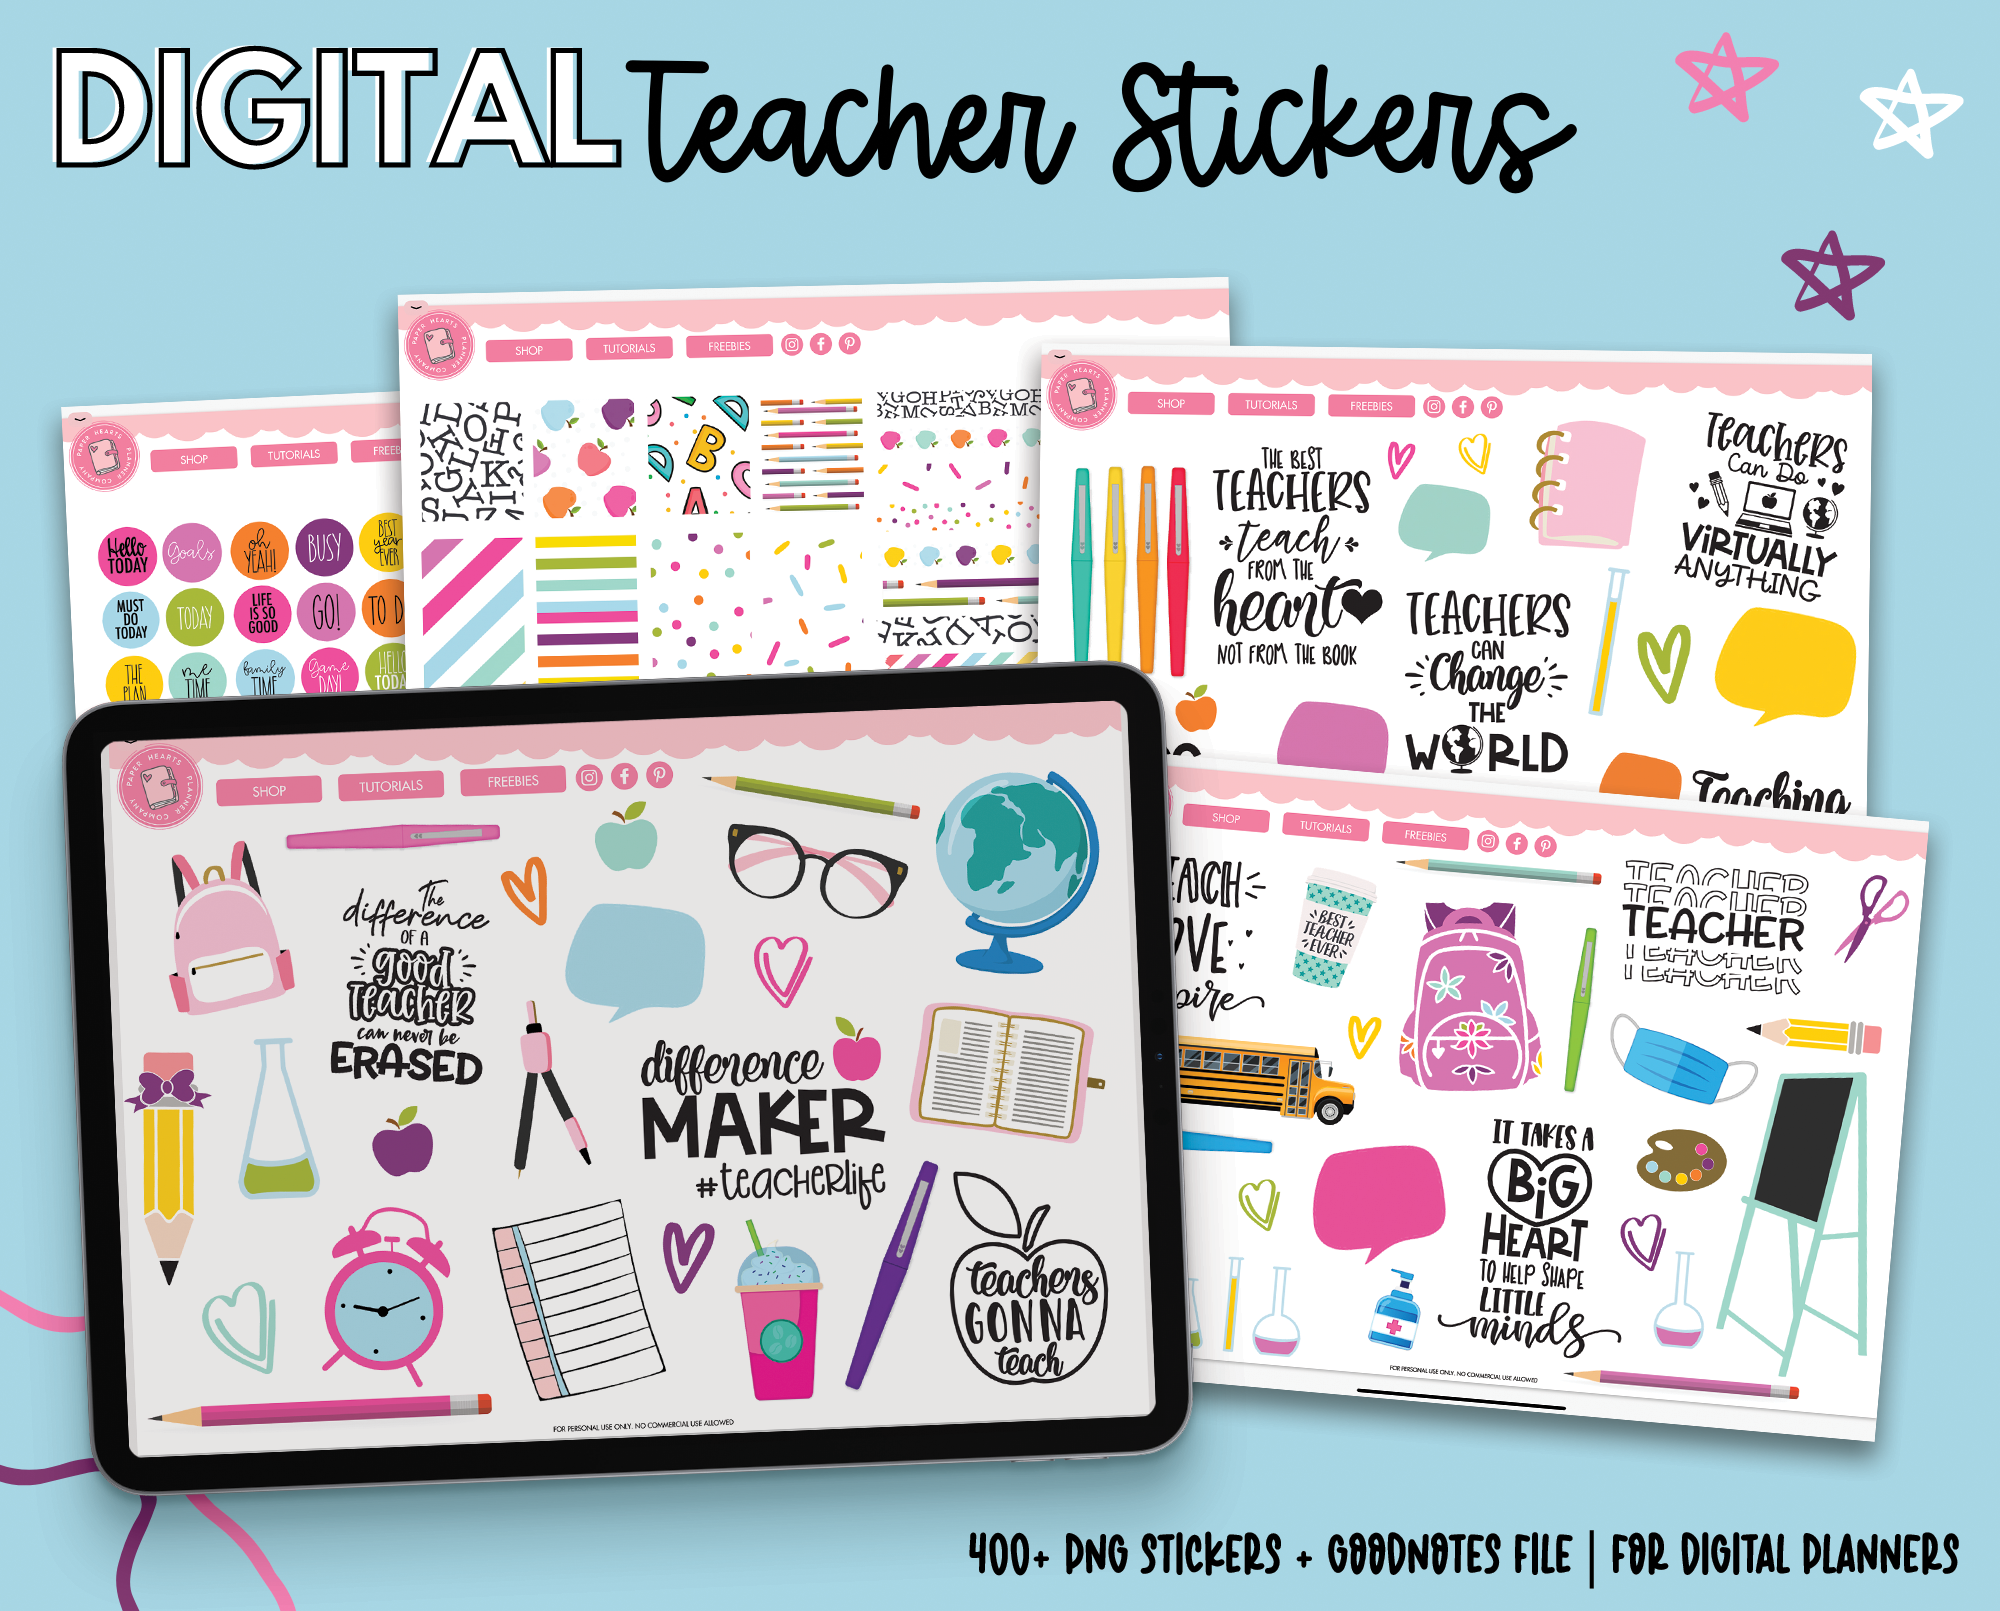 Teacher Header Digital Stickers